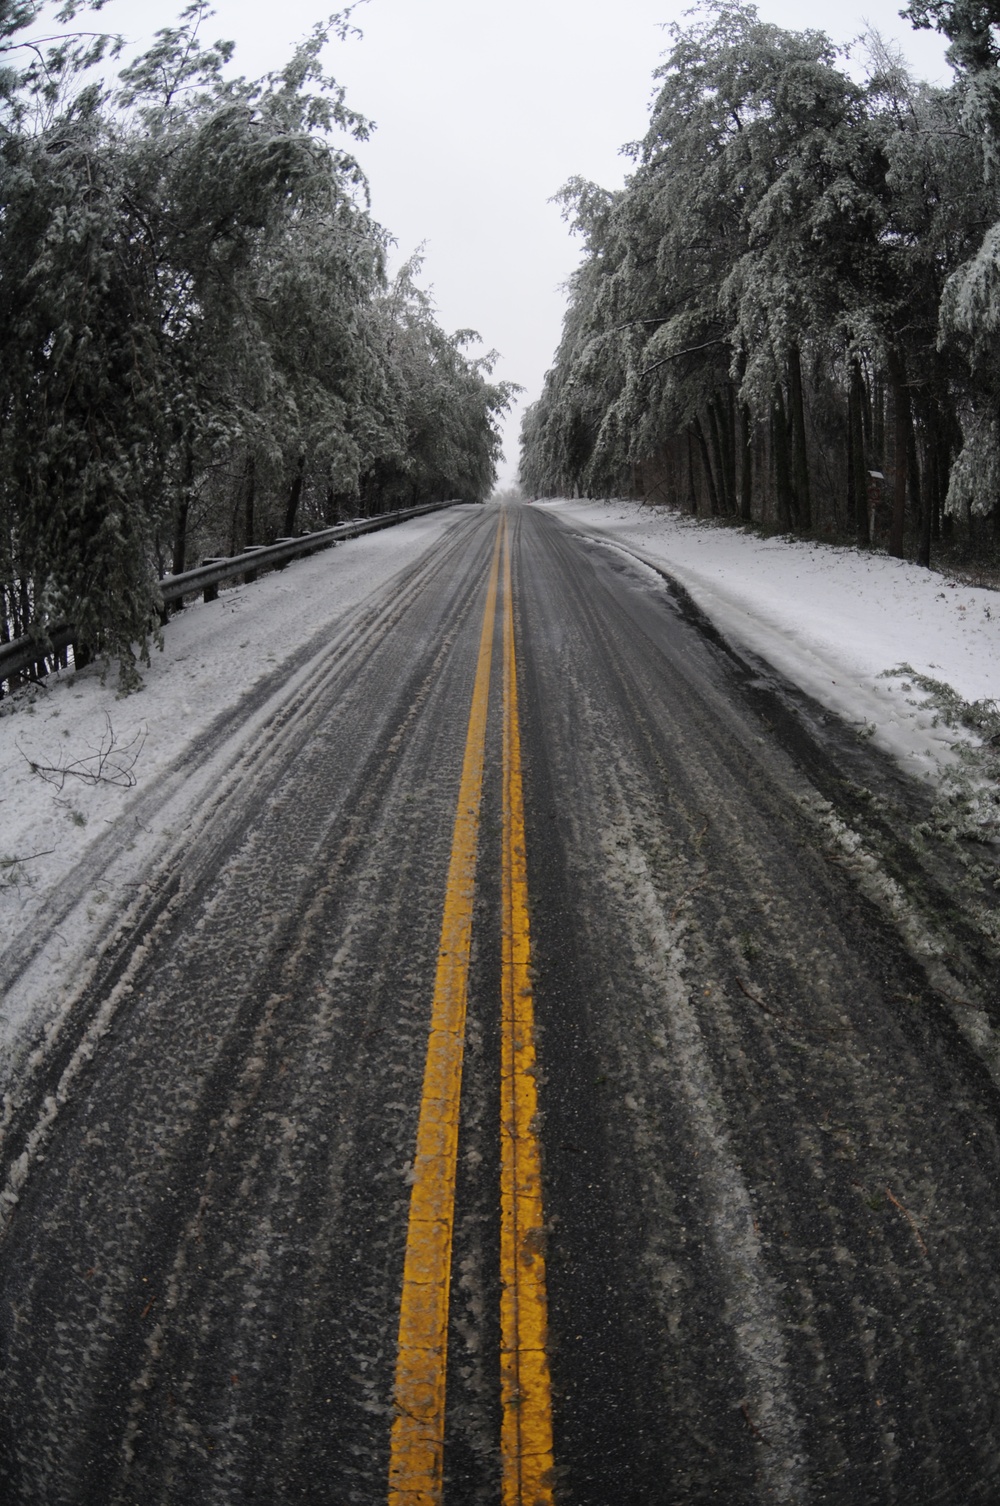 South Carolina Winter Storm January 22, 2016